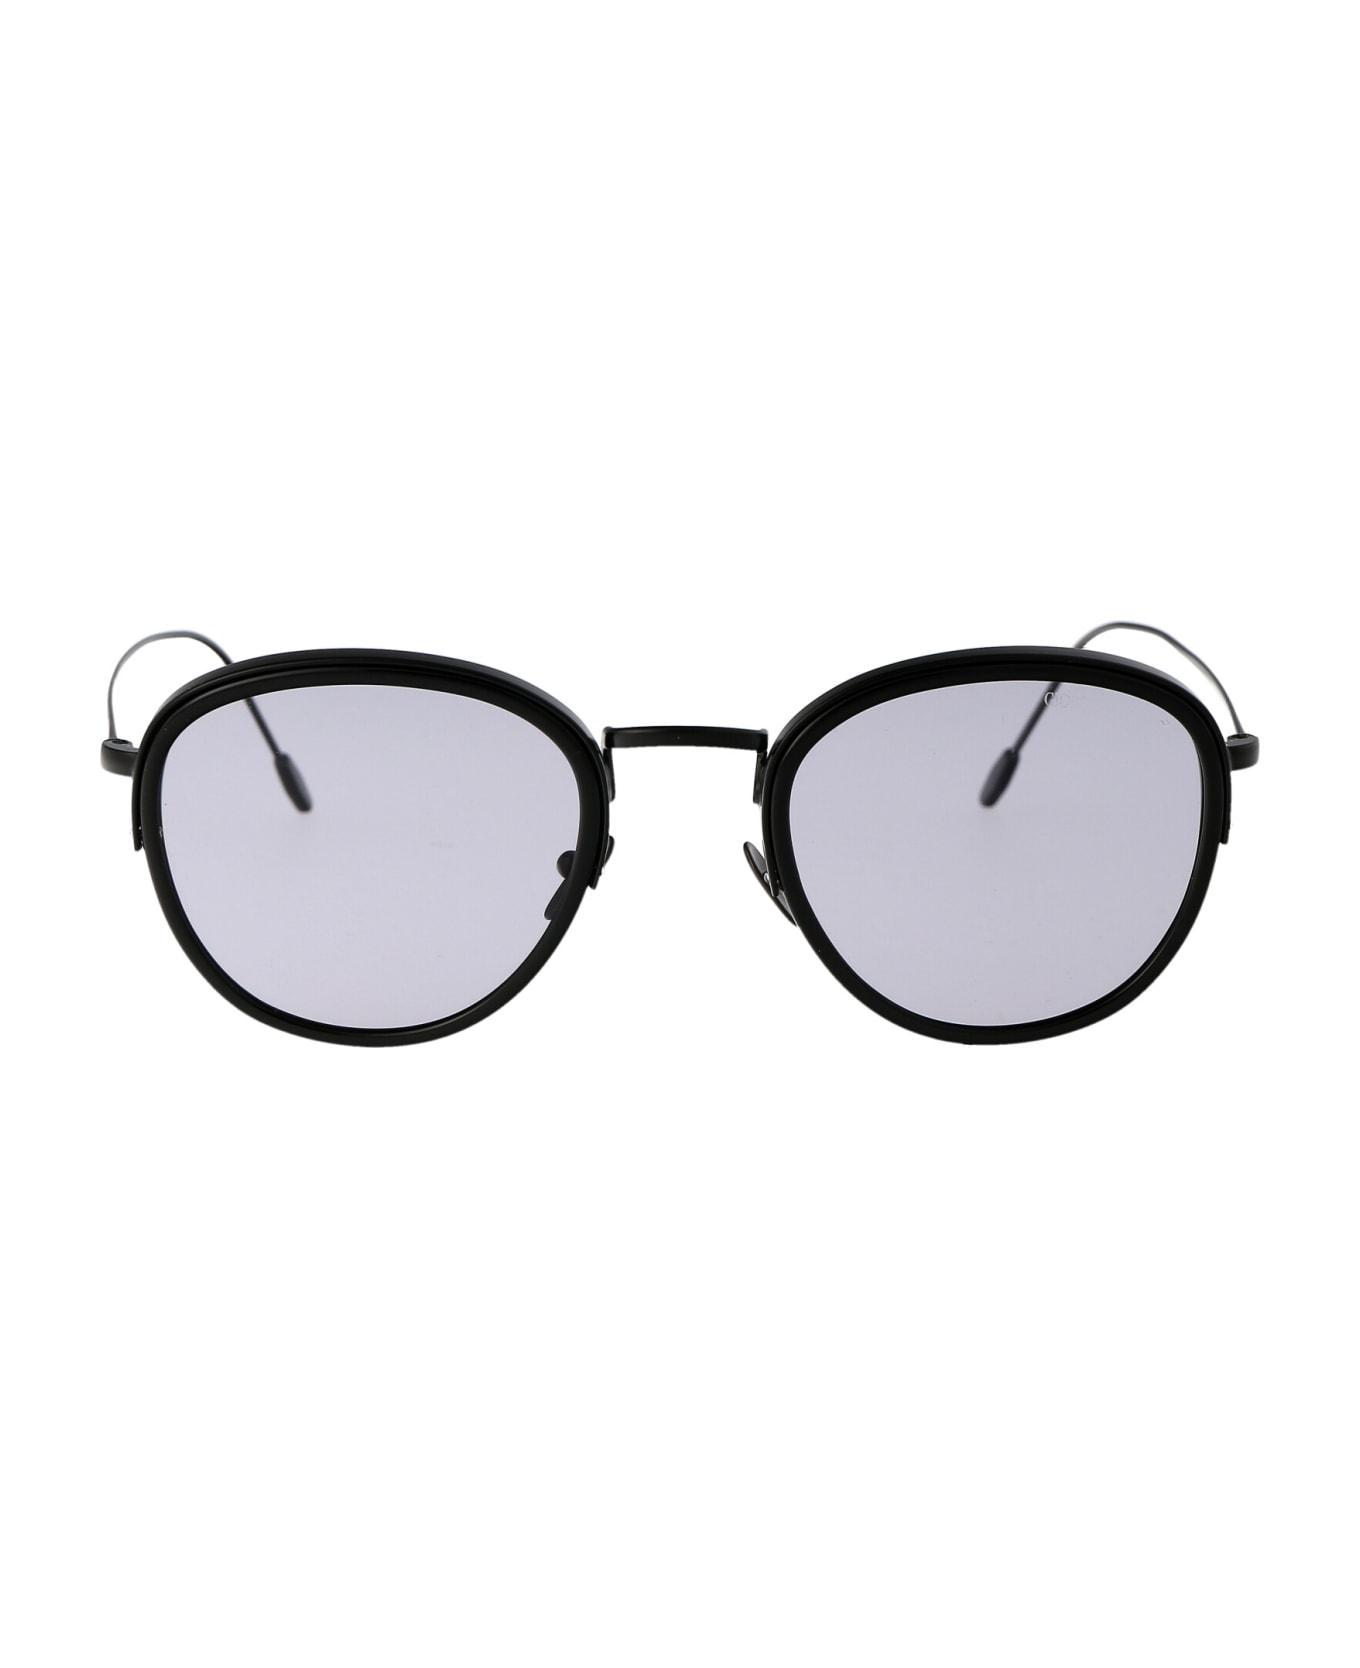 Giorgio Armani 0ar6068 Sunglasses - 3001M3 Matte Black サングラス